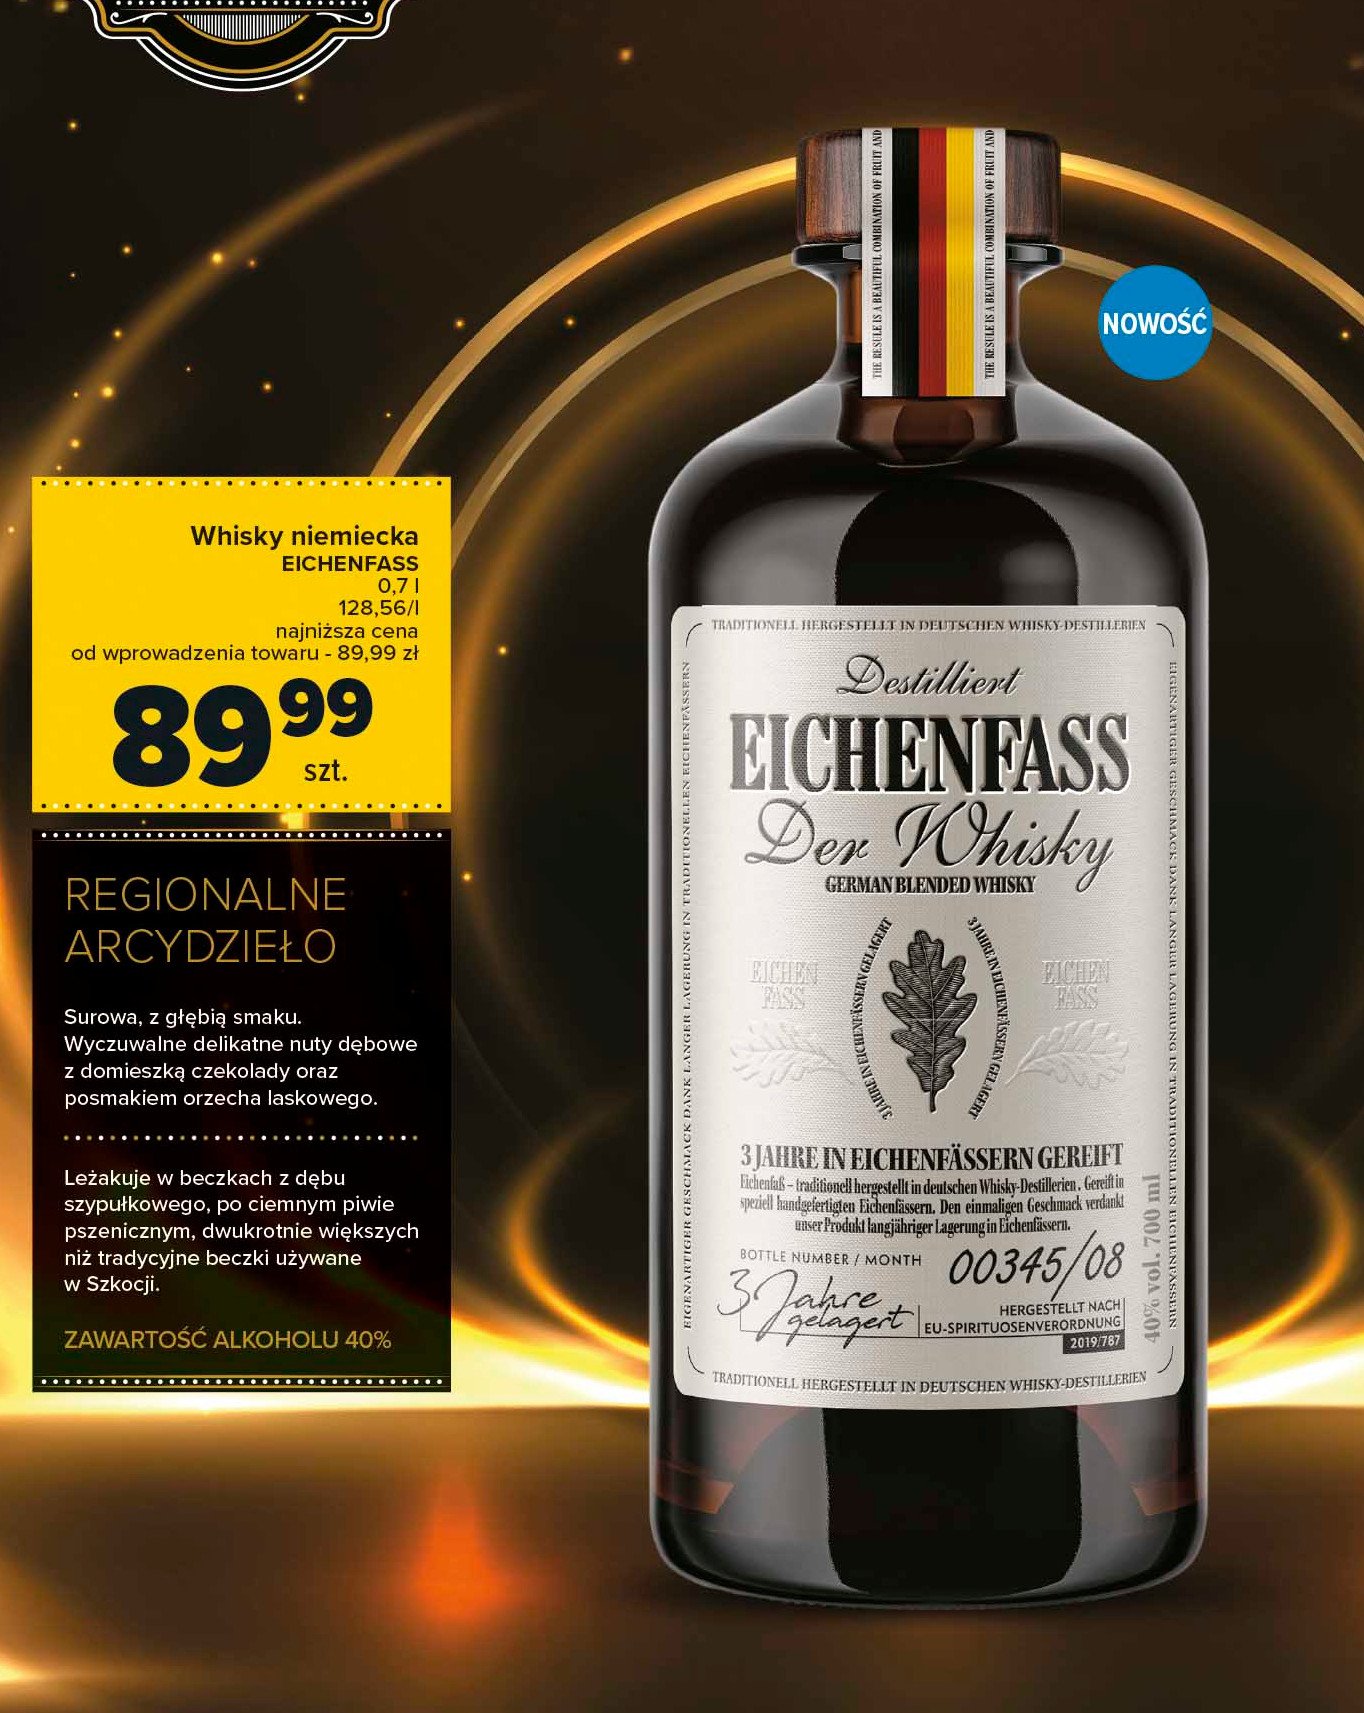 Whisky Eichenfass promocja